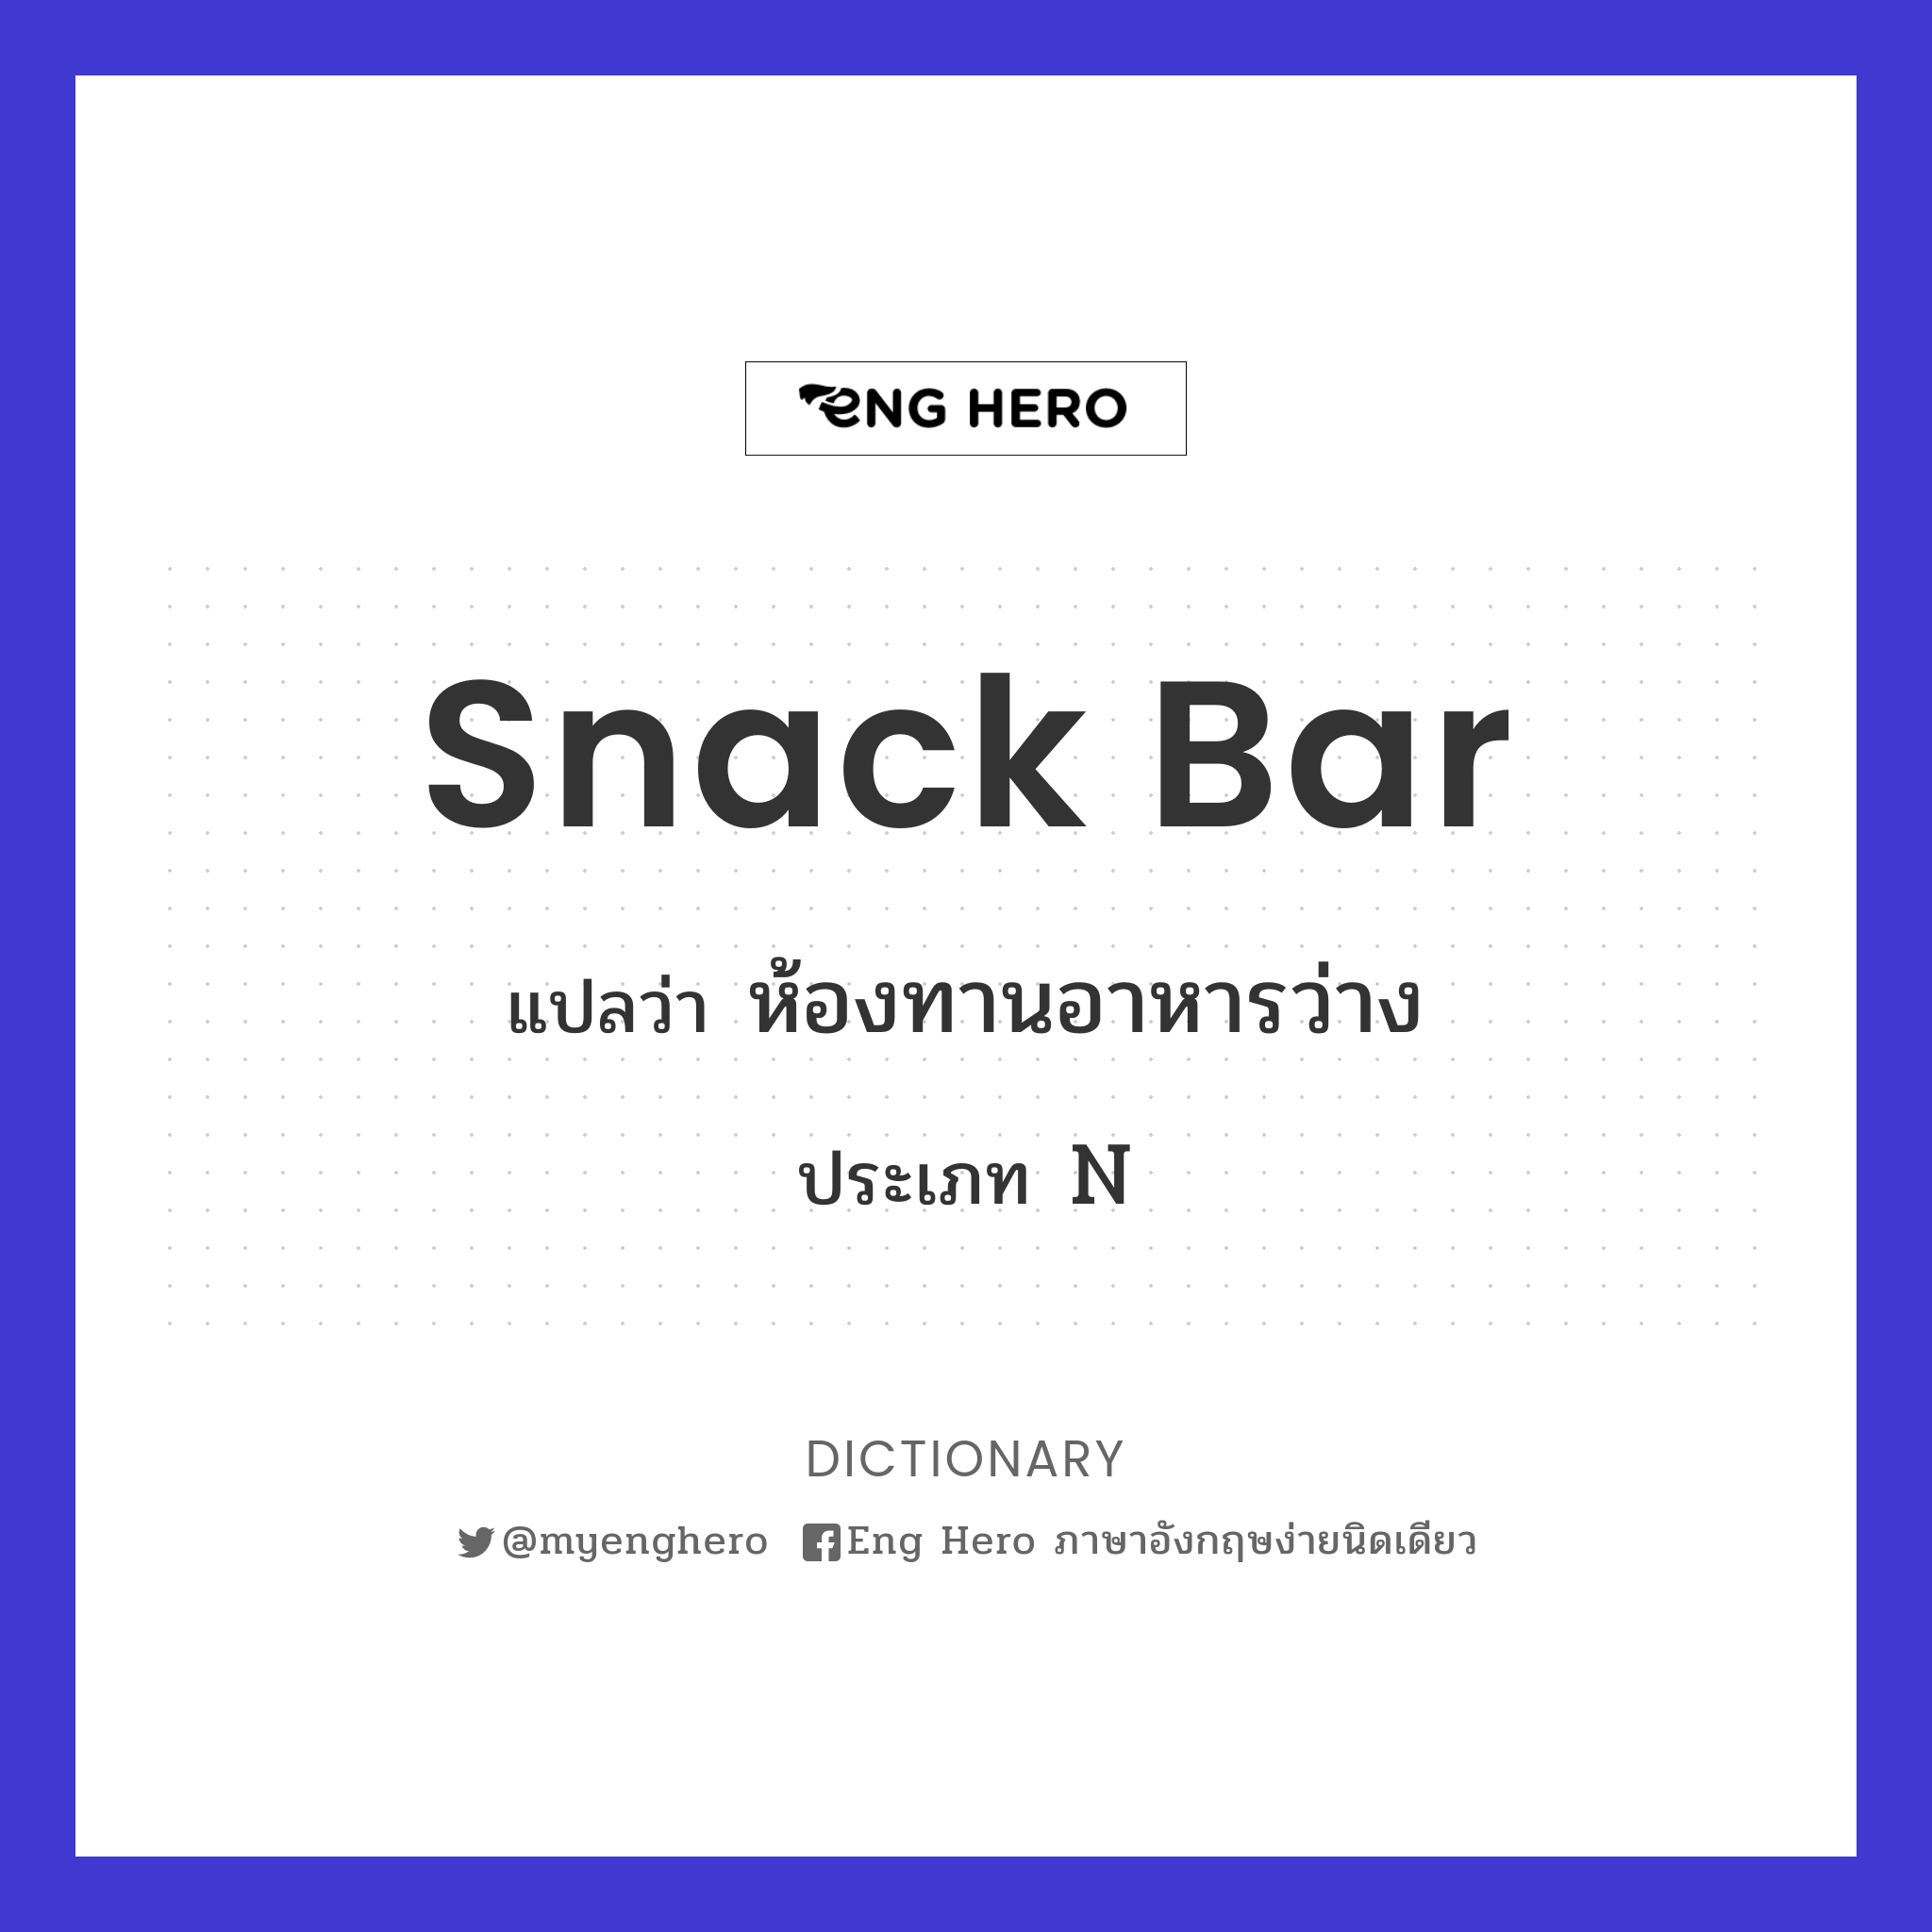 snack bar